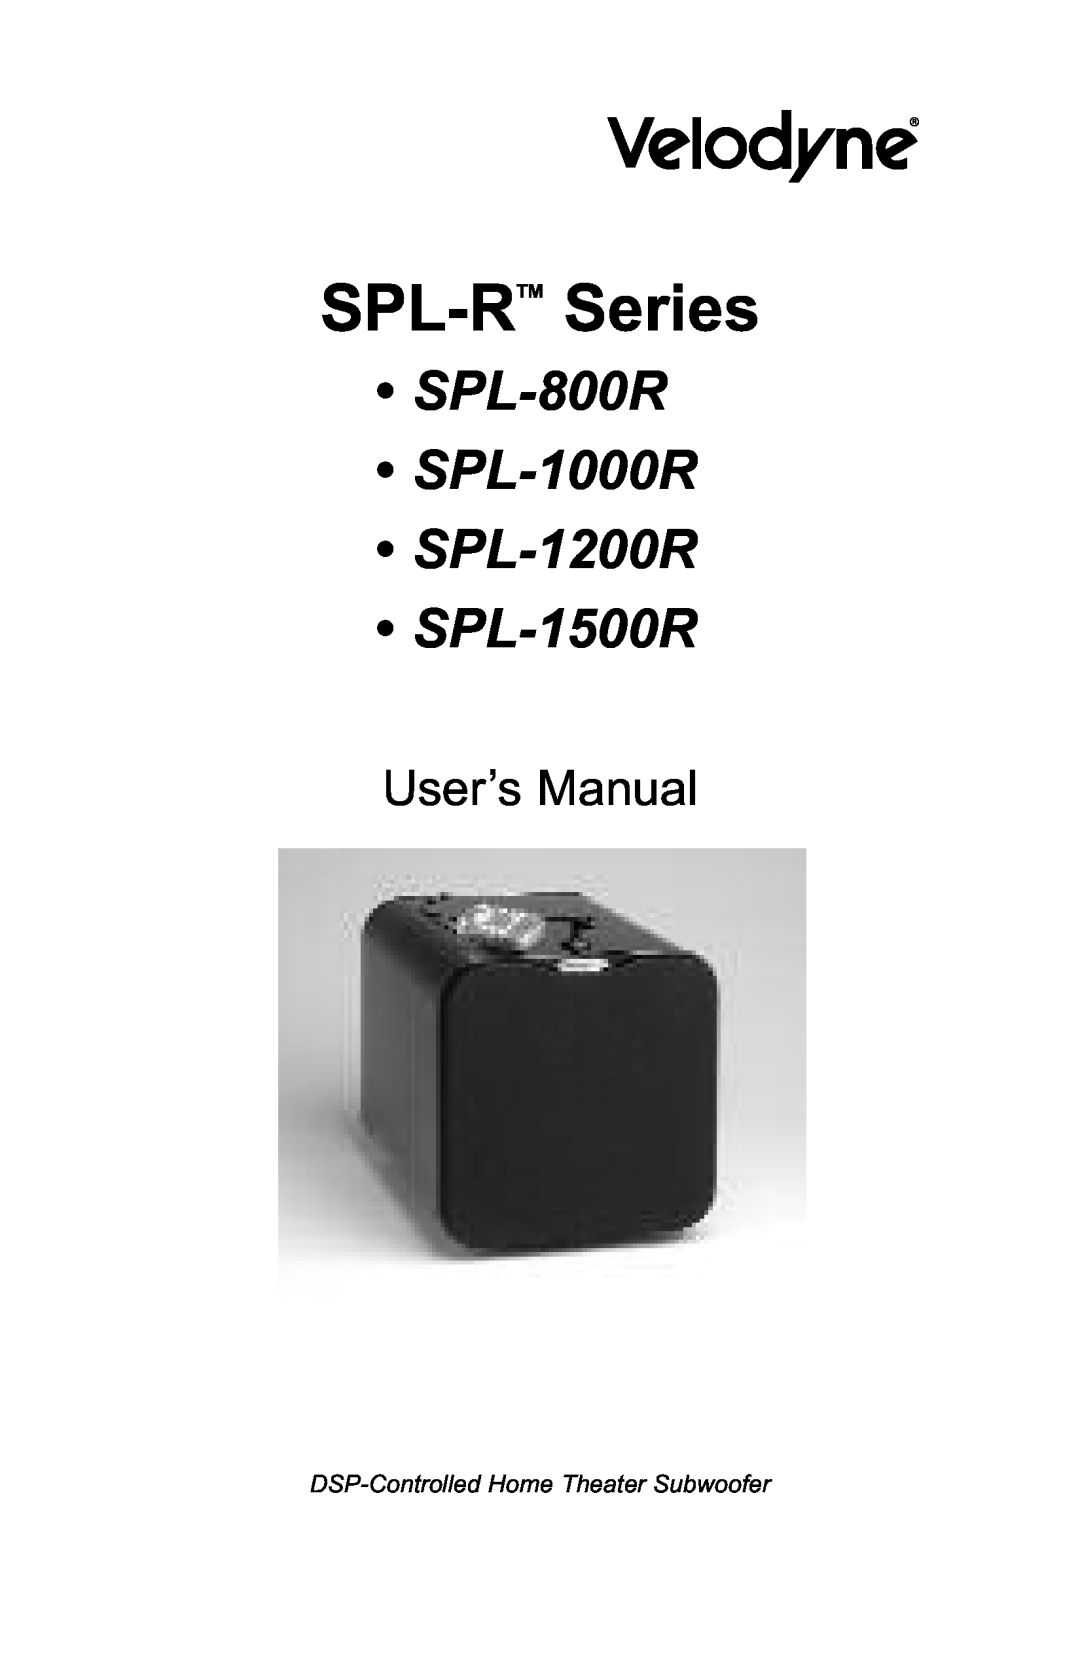 Velodyne Acoustics user manual SPL-RTM Series, SPL-800R SPL-1000R SPL-1200R SPL-1500R, User’s Manual 